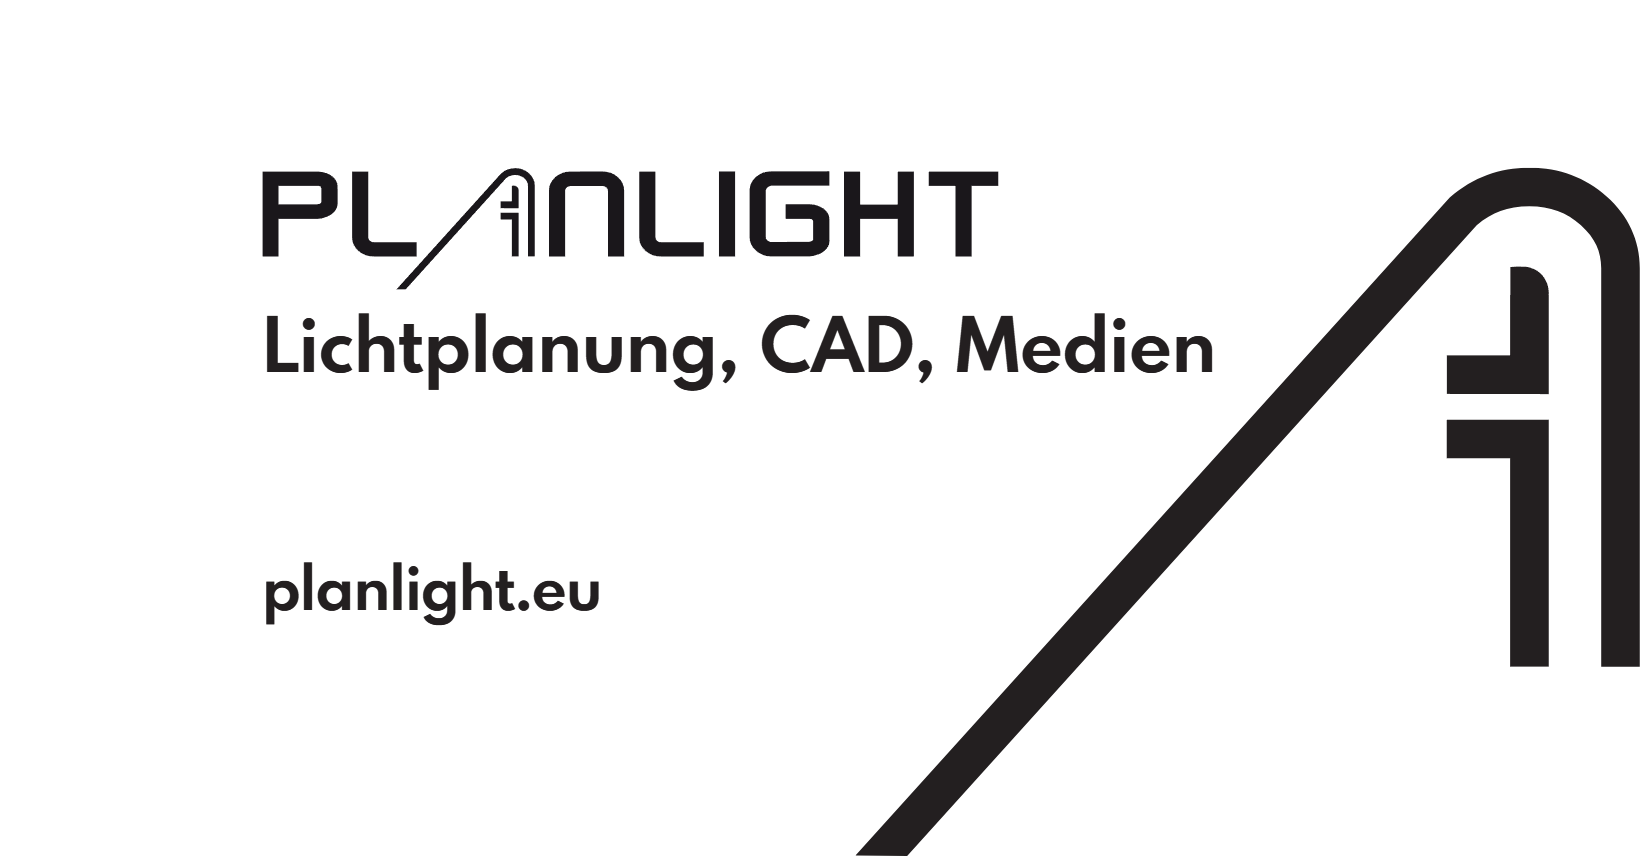 (c) Planlight.eu